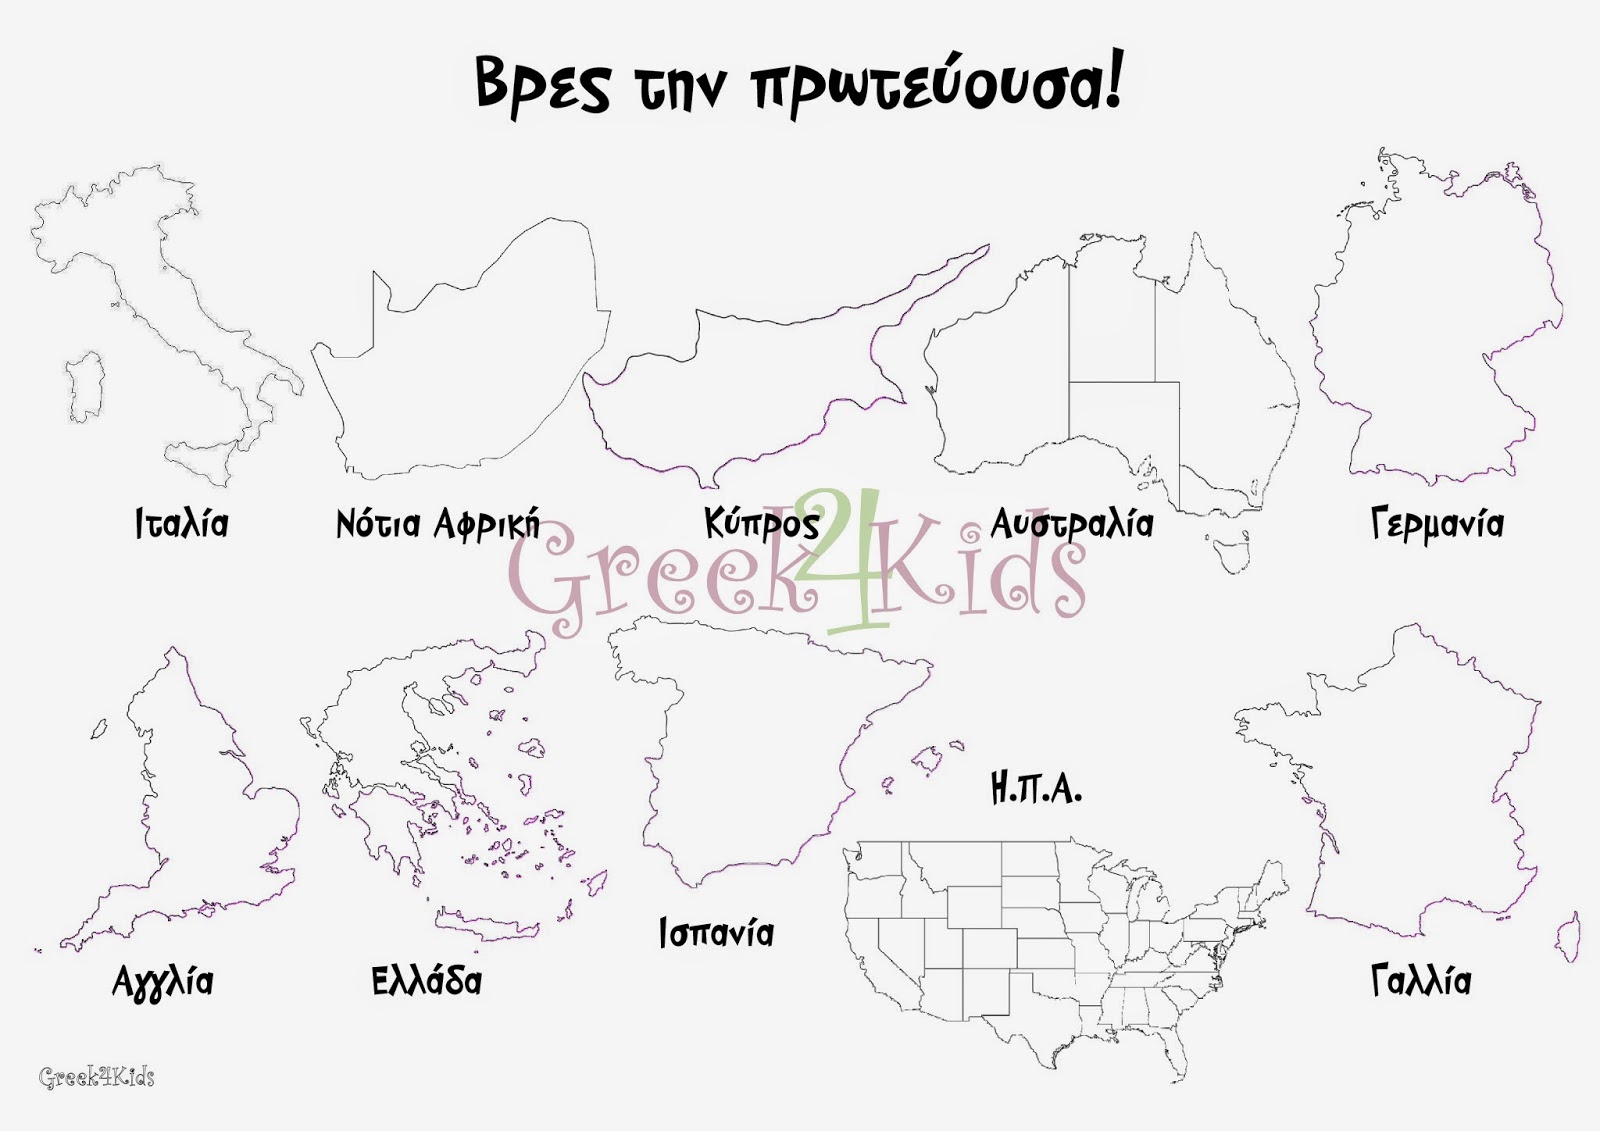 http://www.c7641462.myzen.co.uk/Greek4Kids/Countries1.pdf